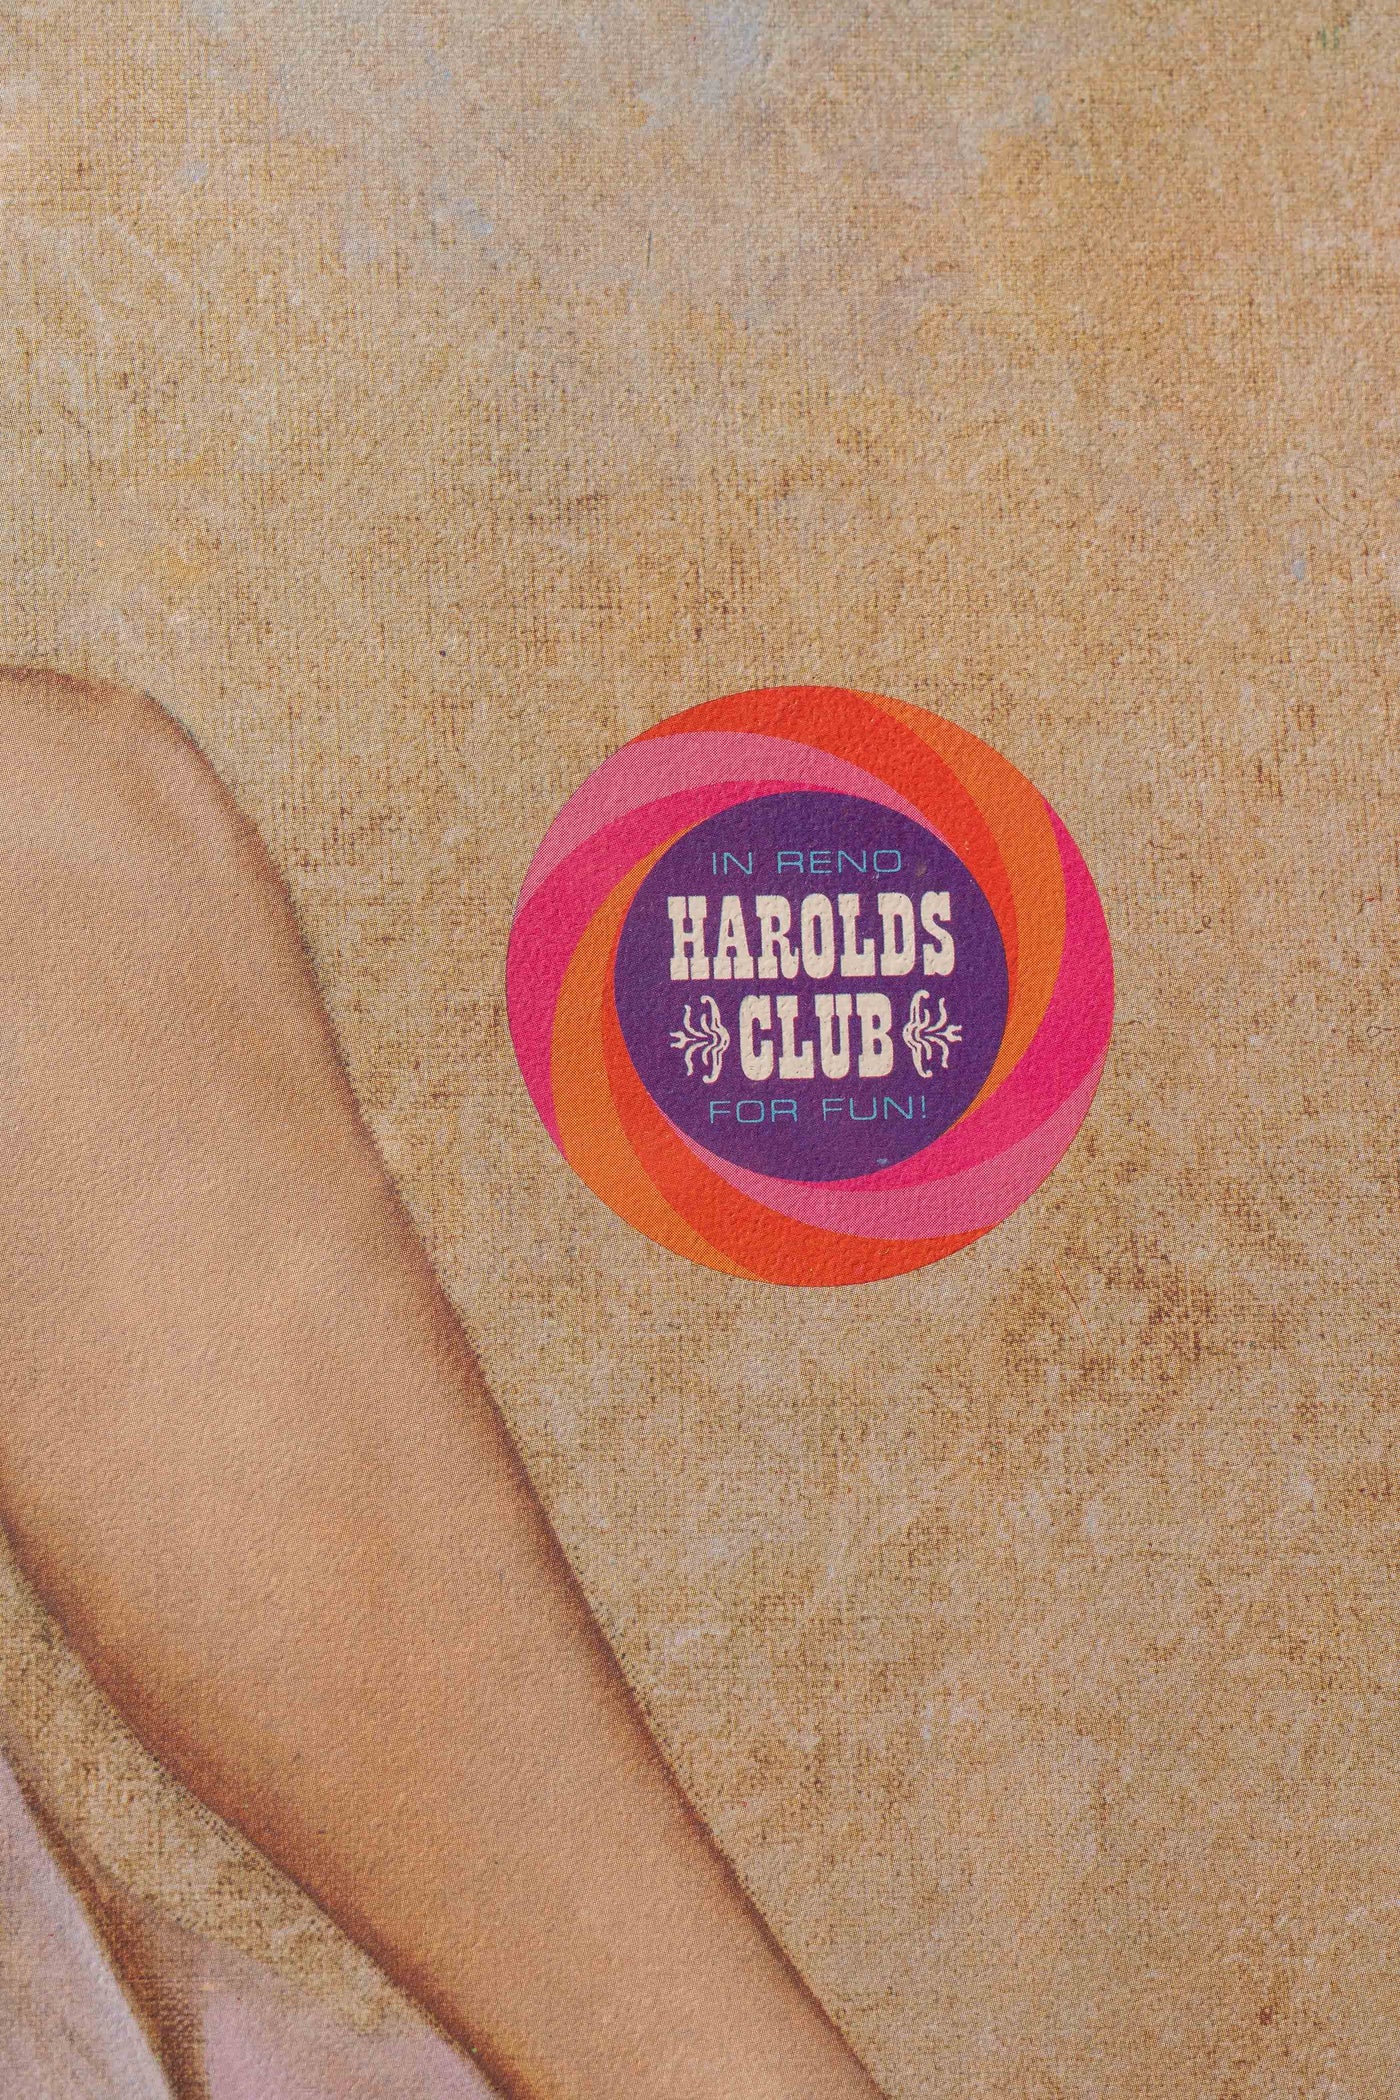 1971 Harolds Club Calendar Girl